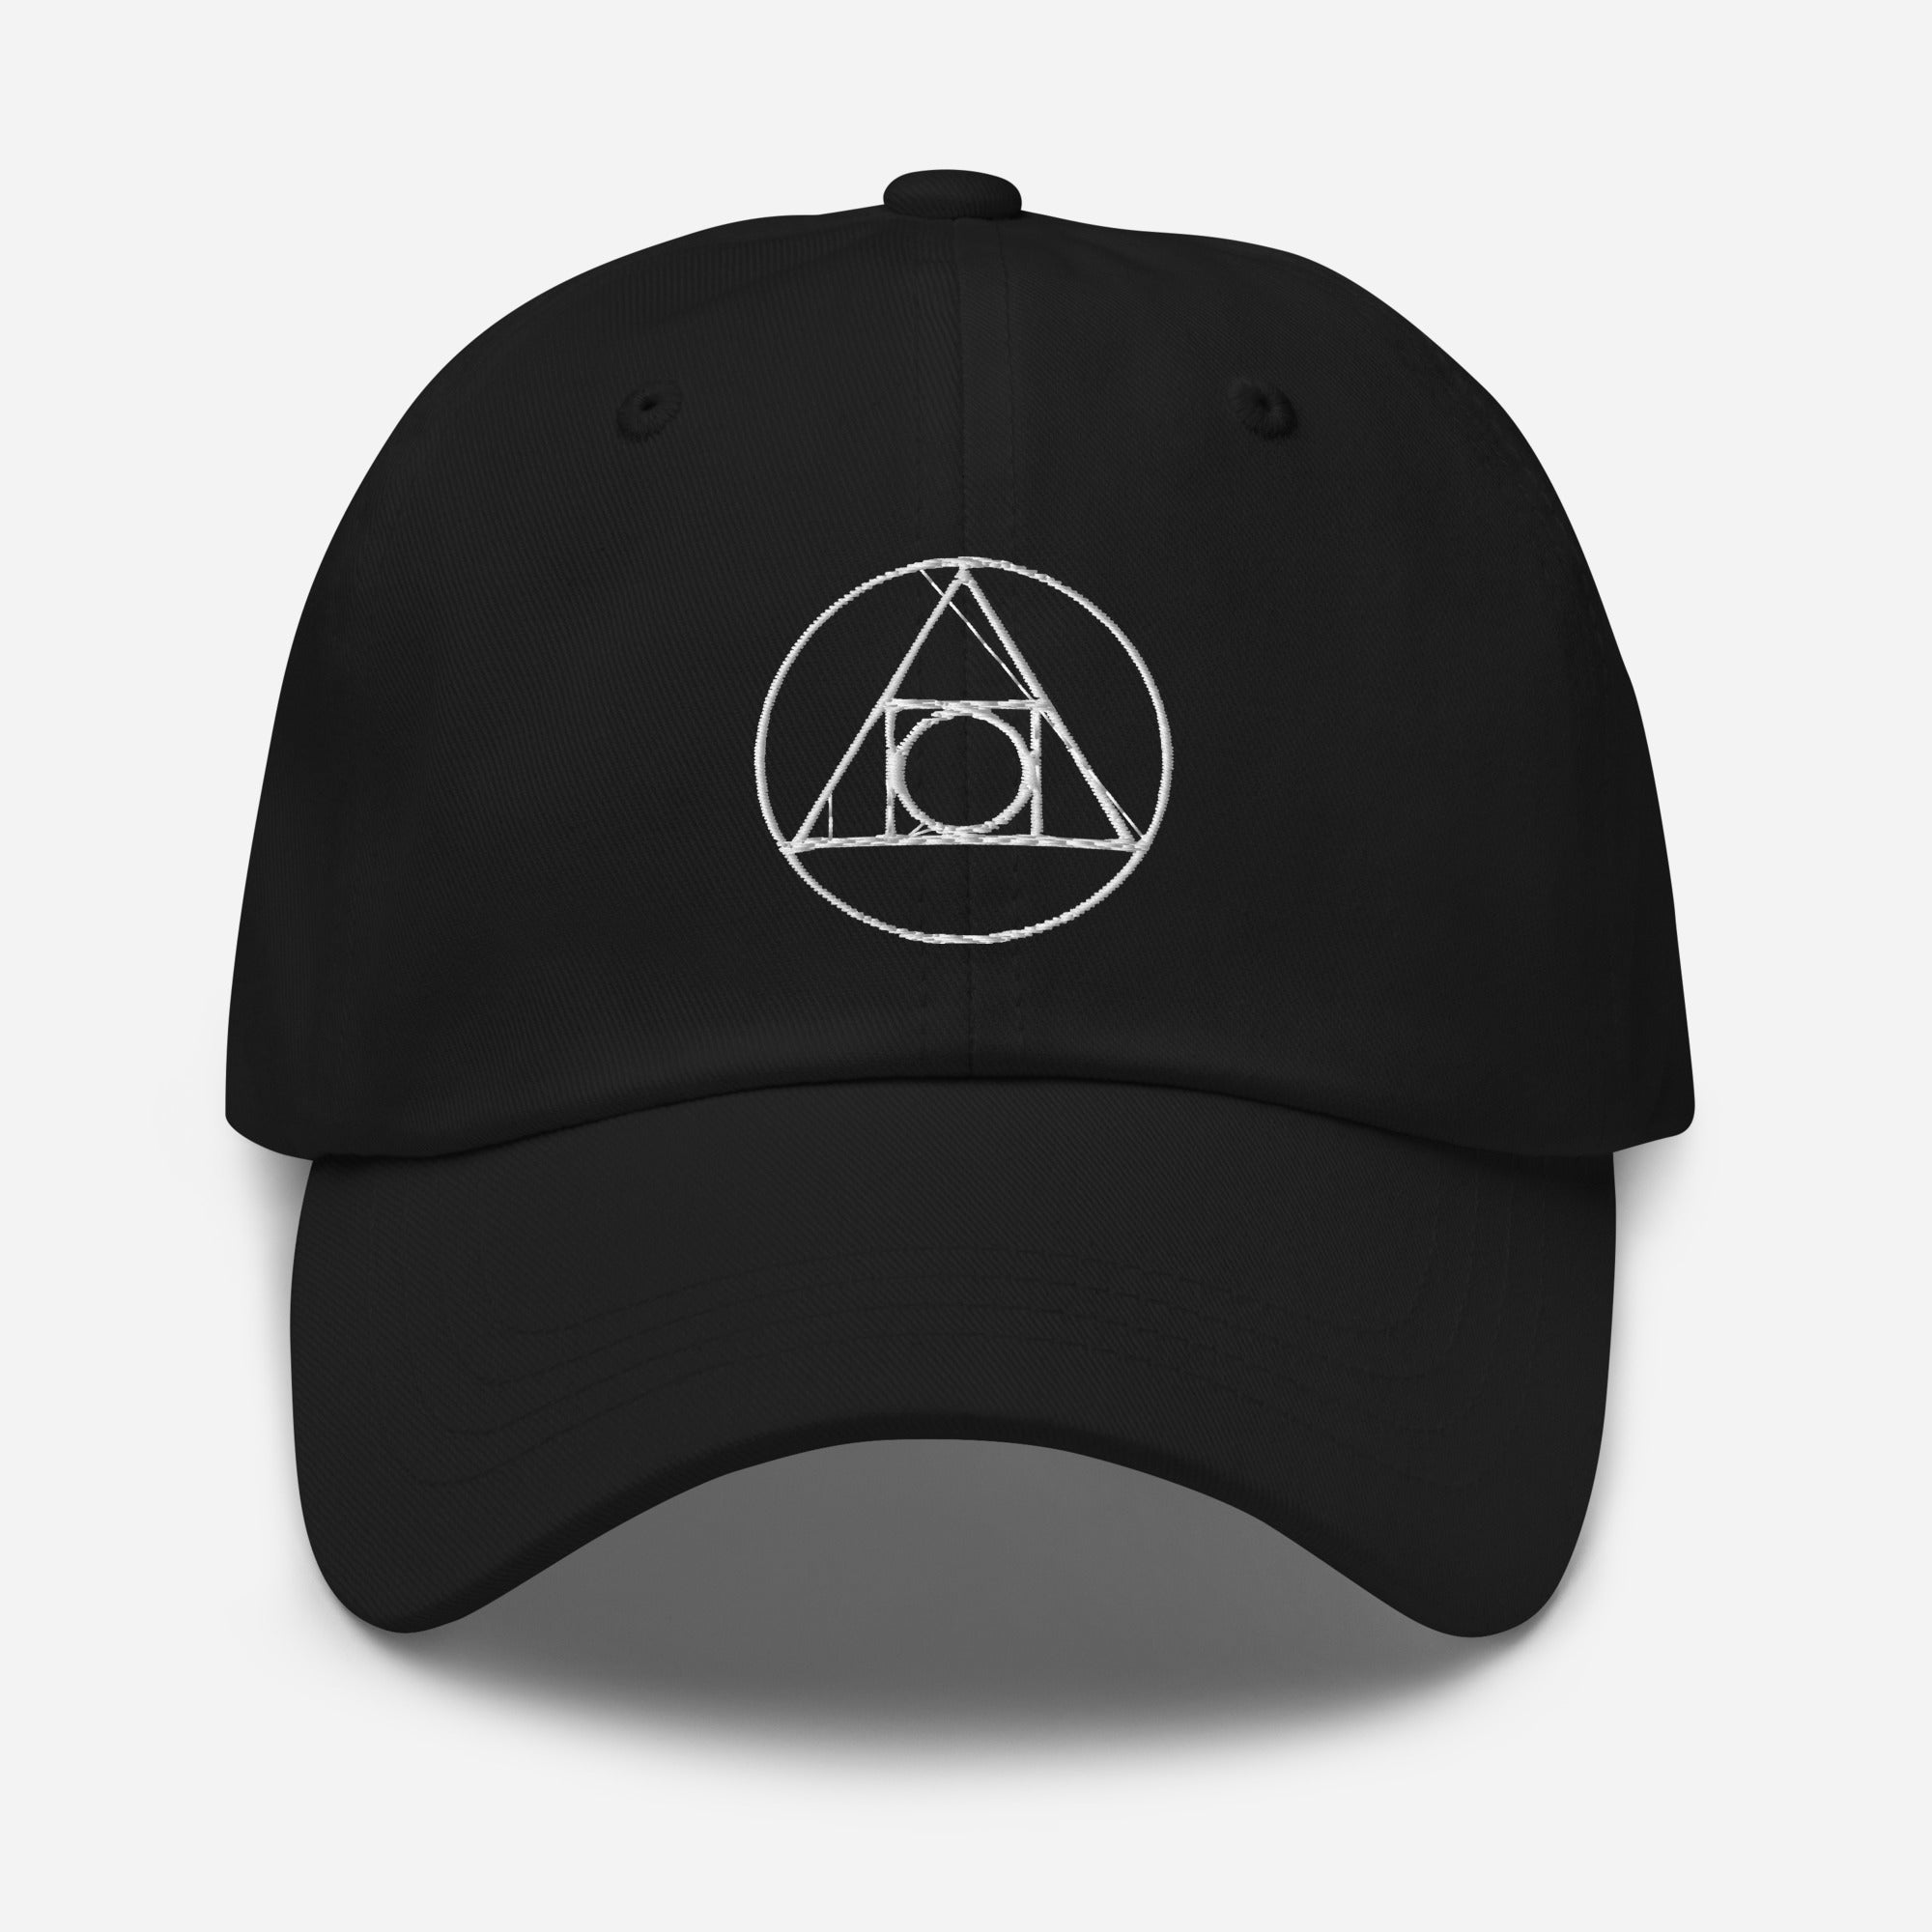 Philosopher's Stone Alchemy Symbol Embroidered Baseball Cap Dad hat